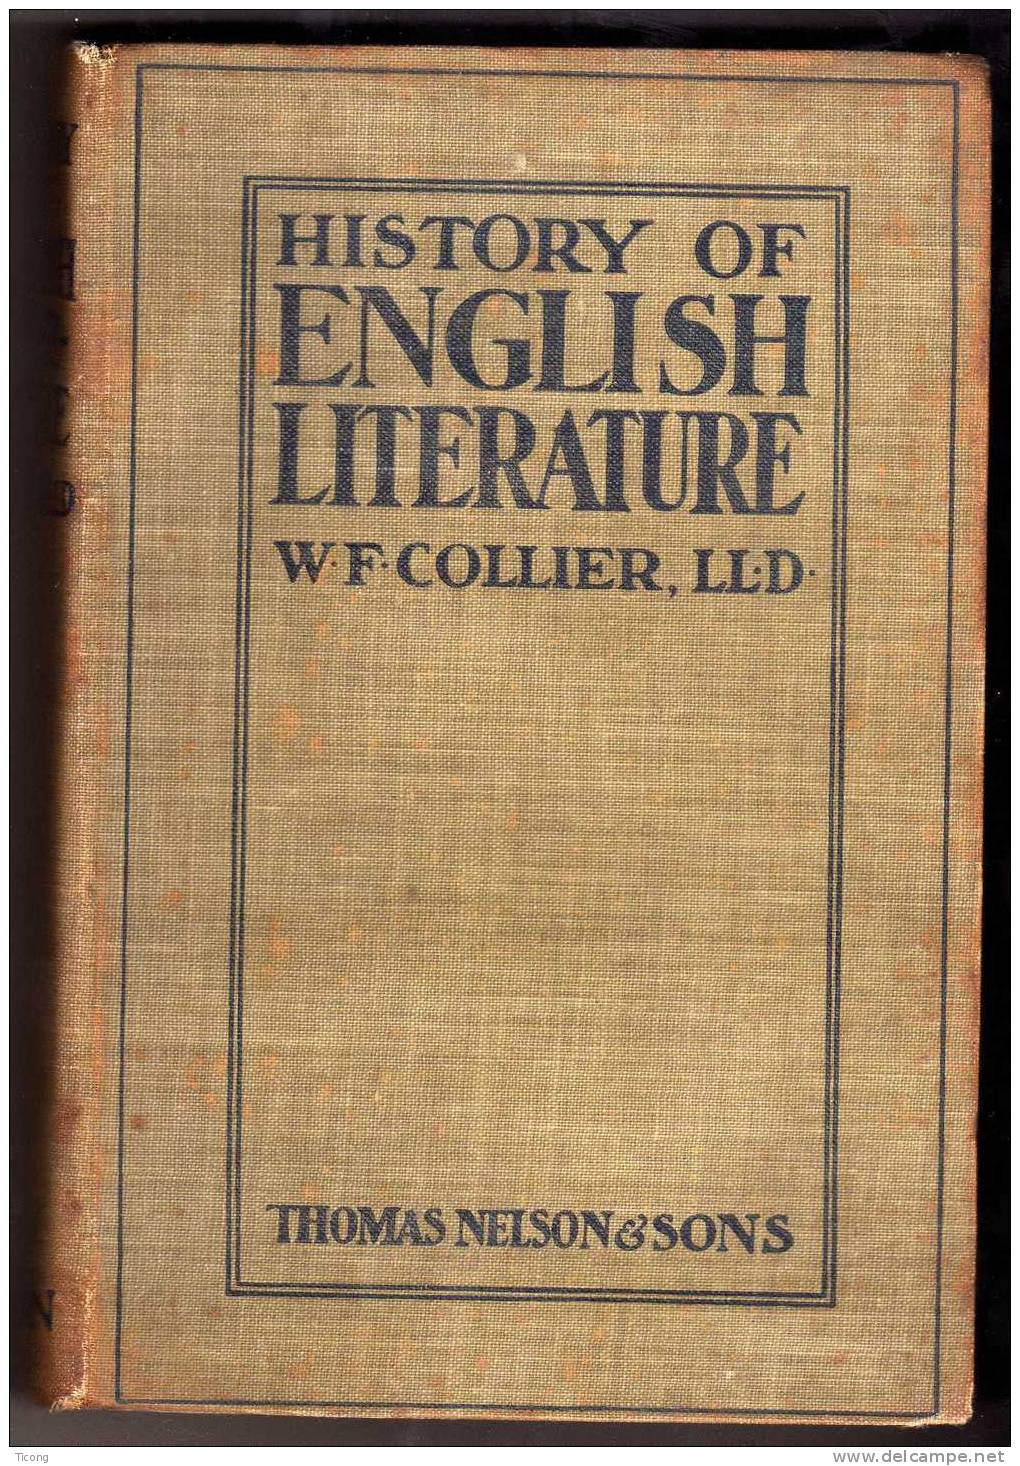 HISTORY OF ENGLISH LITERATURE - W F COLLIER LL D- THOMAS NELSON SONS - HISTOIRE DE LA LITTERATURE ANGLAISE 1912 - Anthologieën